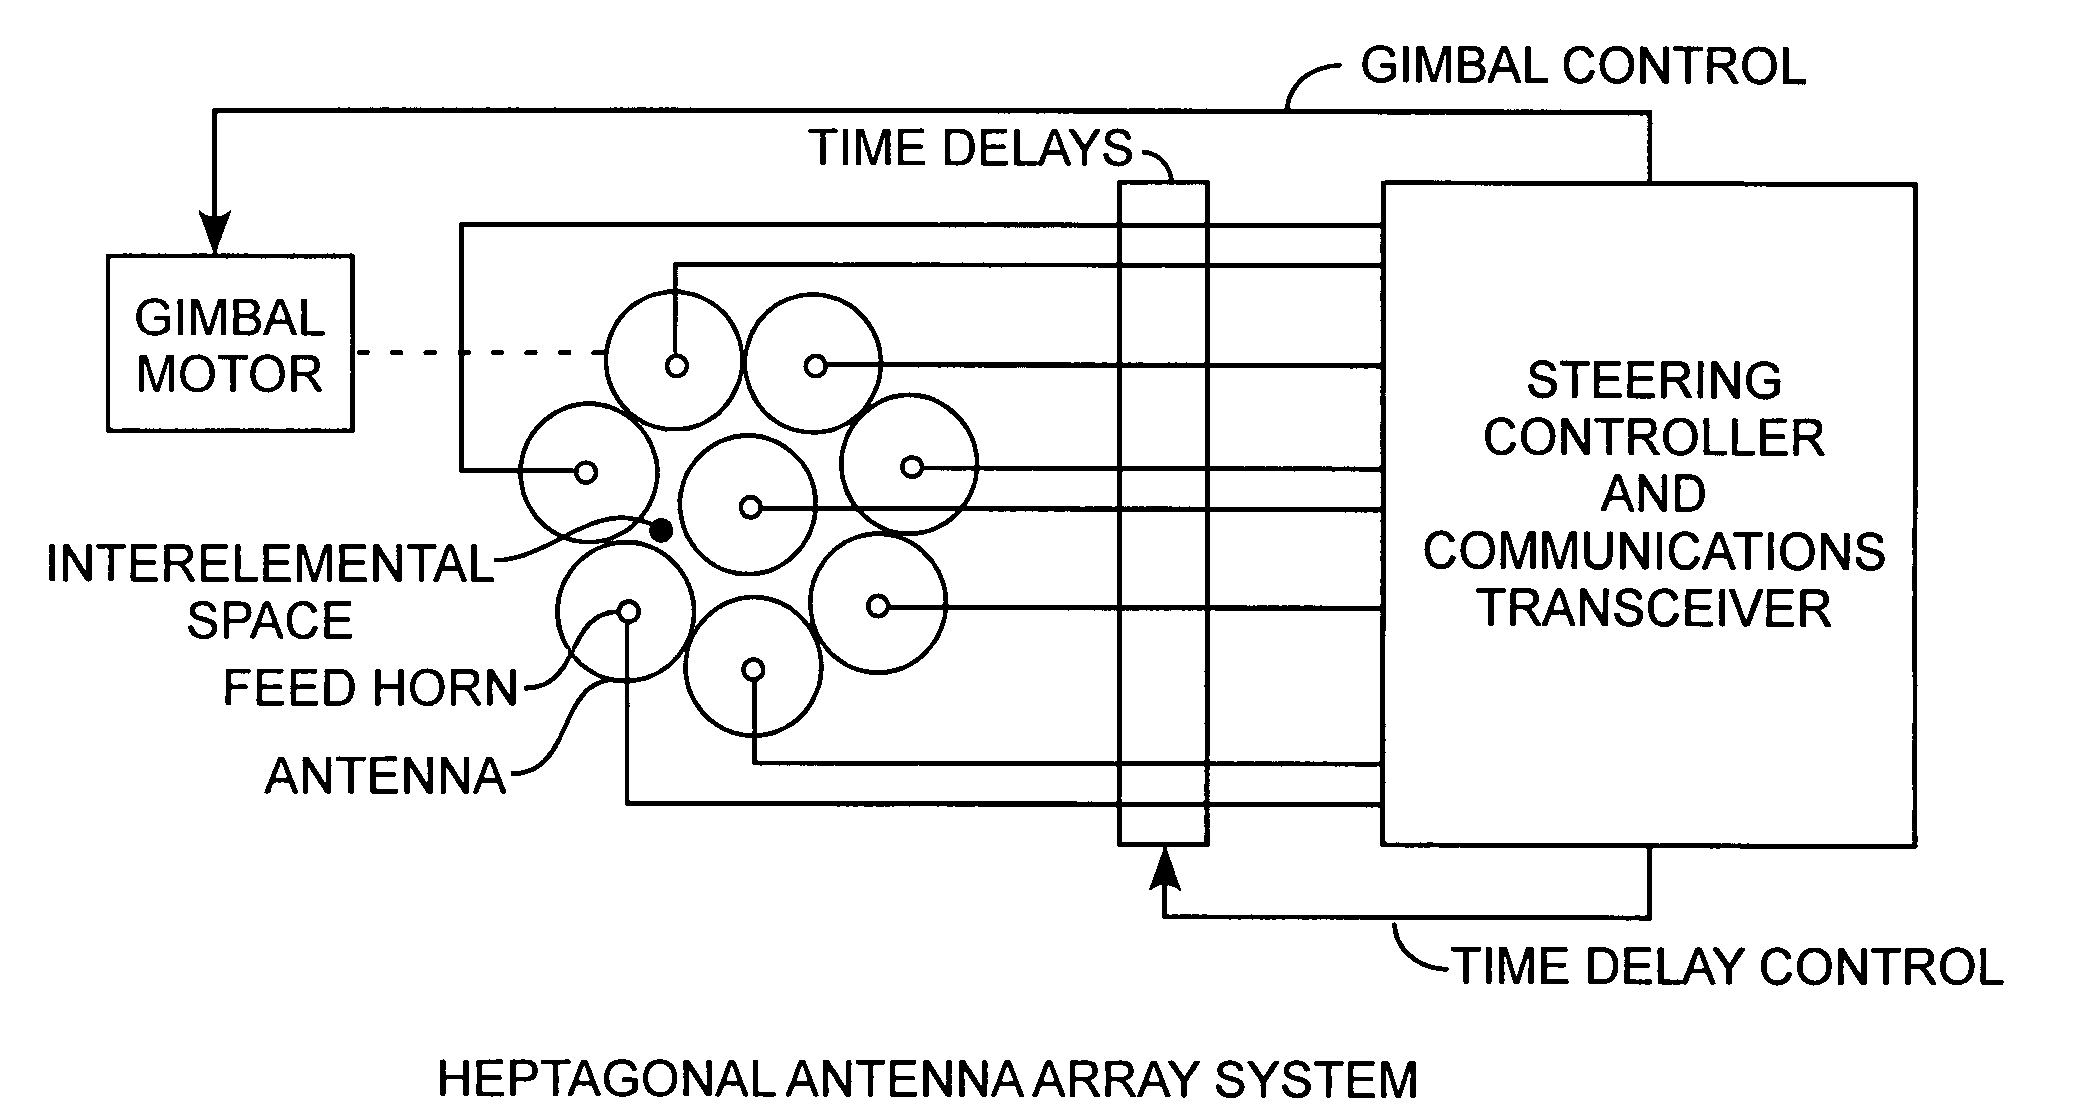 Heptagonal antenna array system